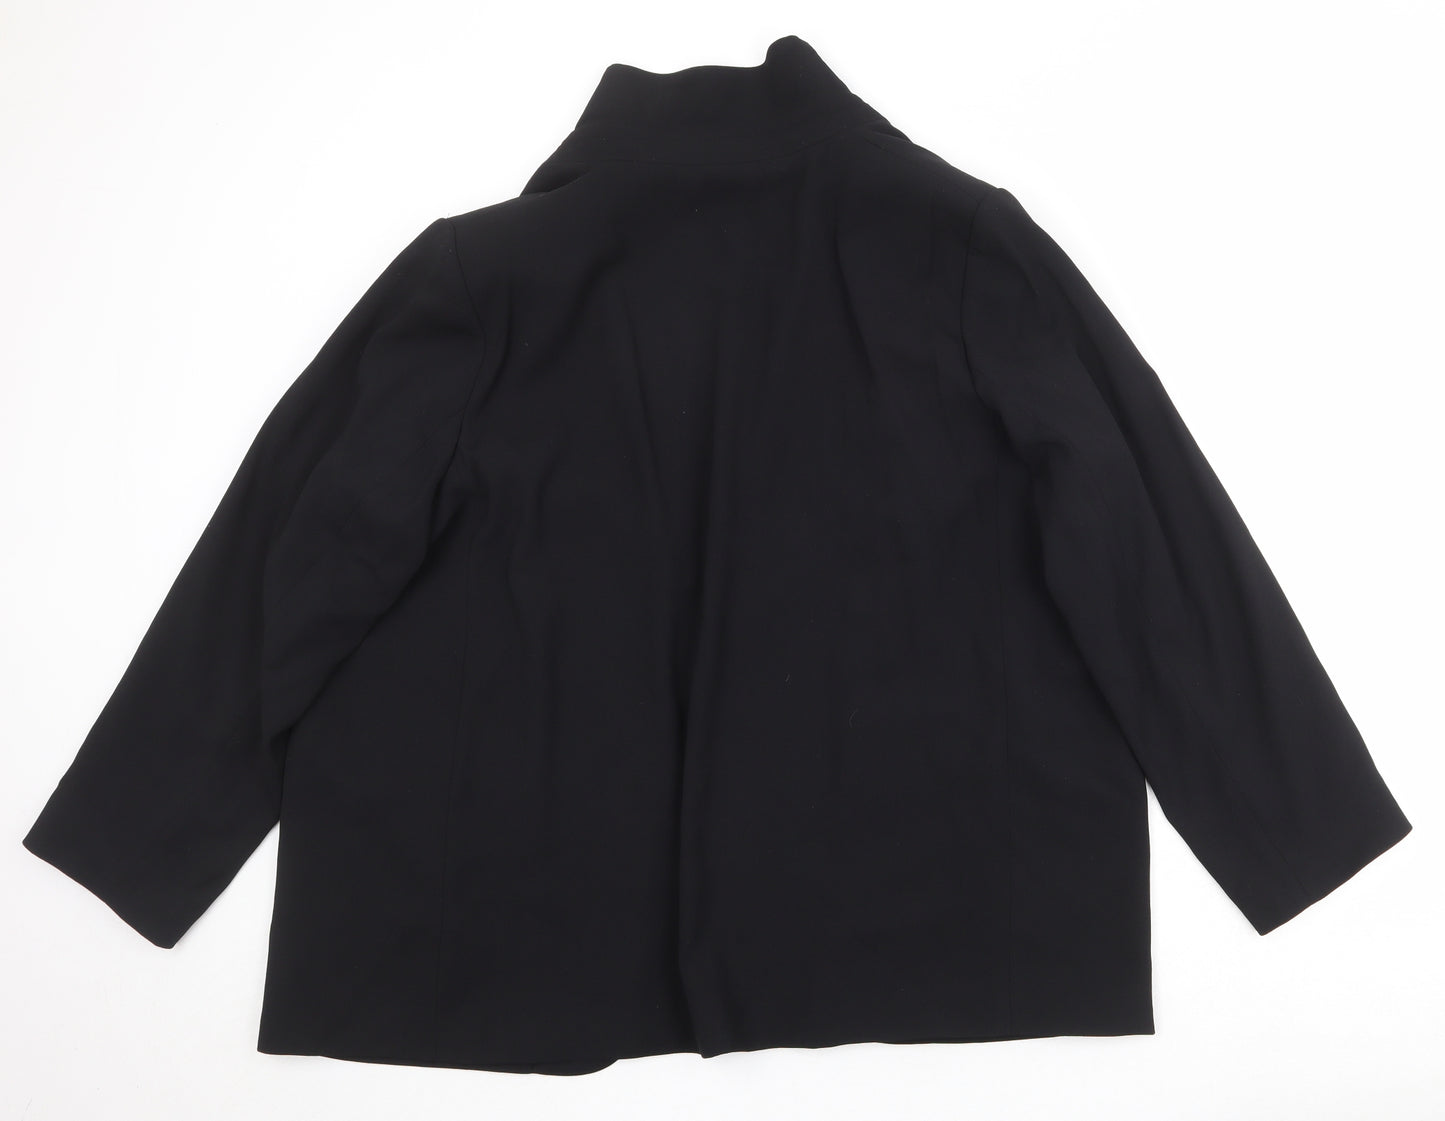 Marks and Spencer Womens Black Polyester Jacket Blazer Size 20